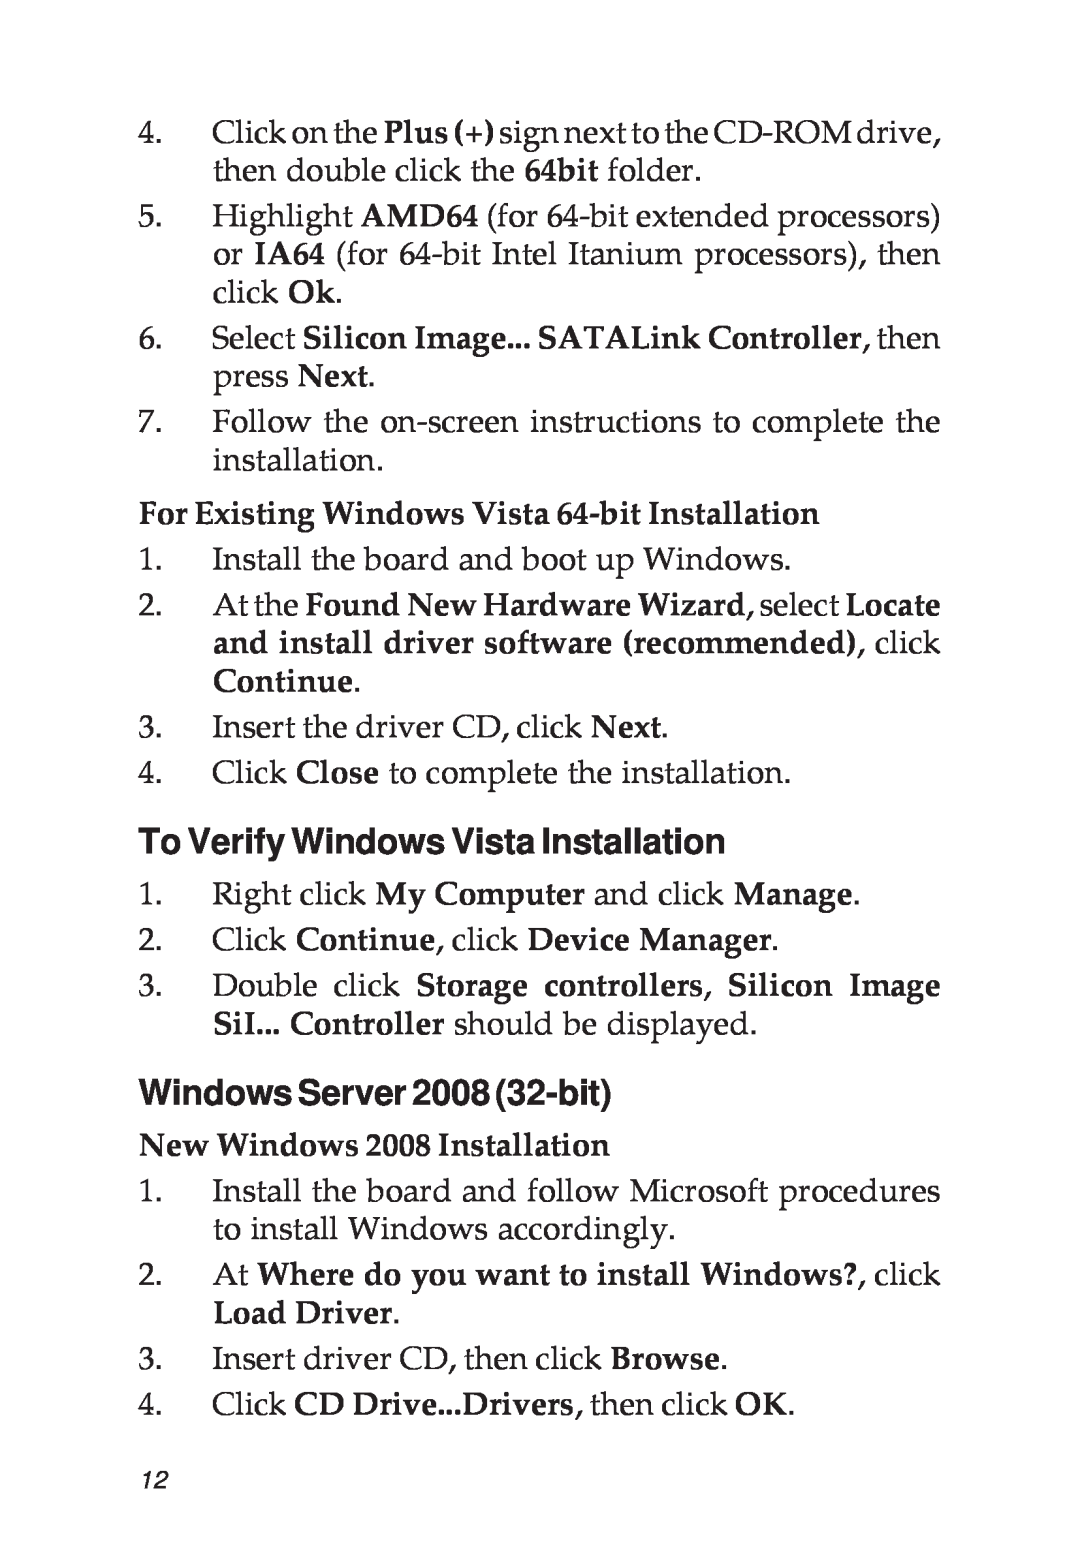 SIIG 04-0265F specifications To Verify Windows Vista Installation, Windows Server 2008 32-bit 